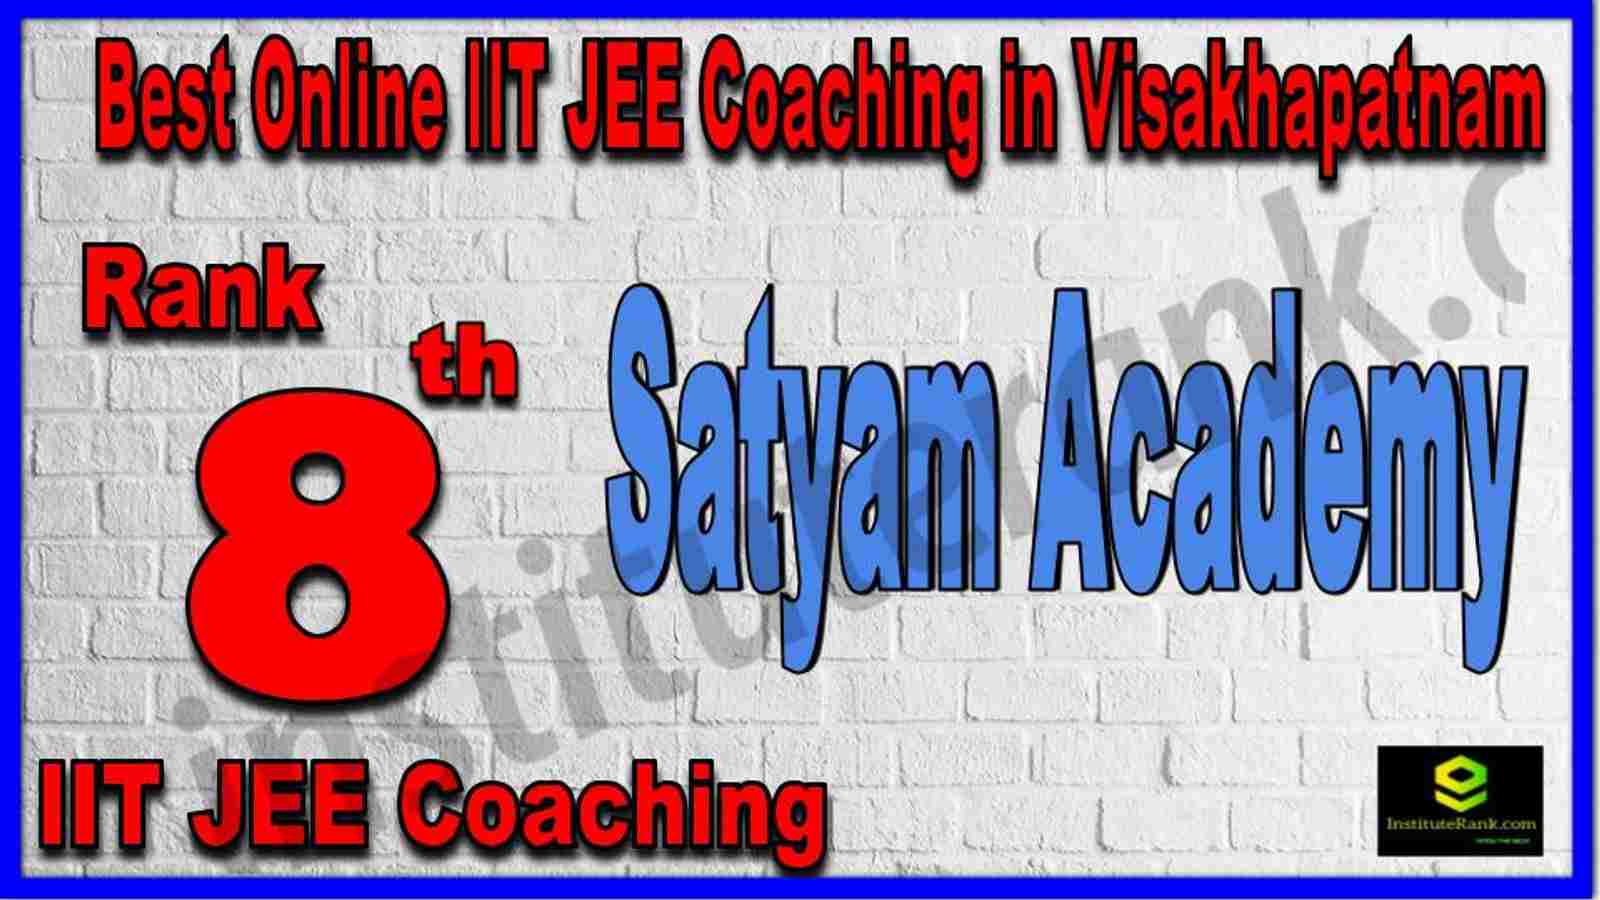 Rank 8th Best Online IIT JEE Coaching in Visakhapatnam